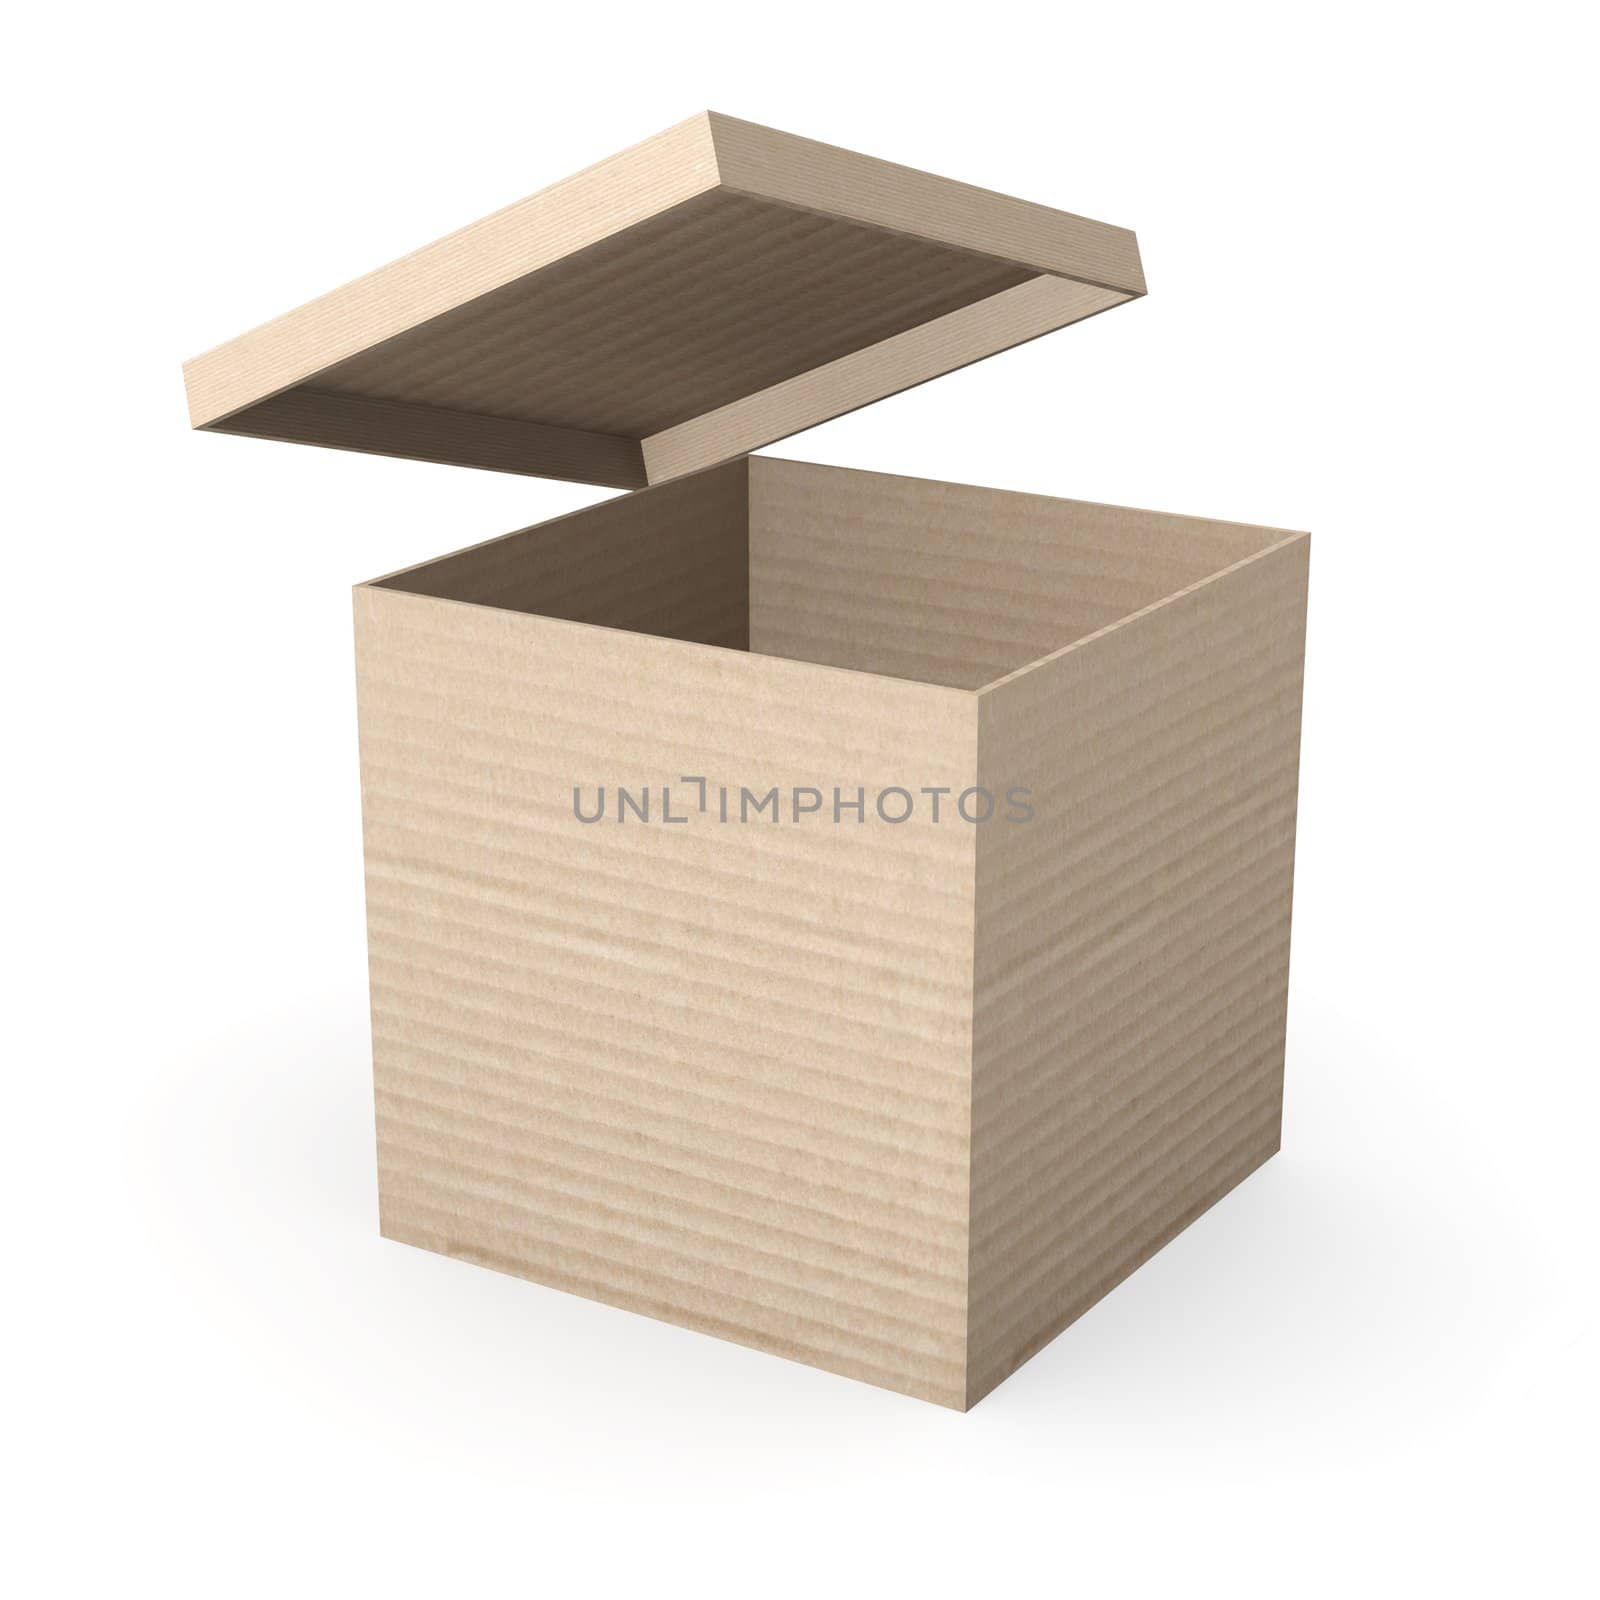 Carton Box by Spectral